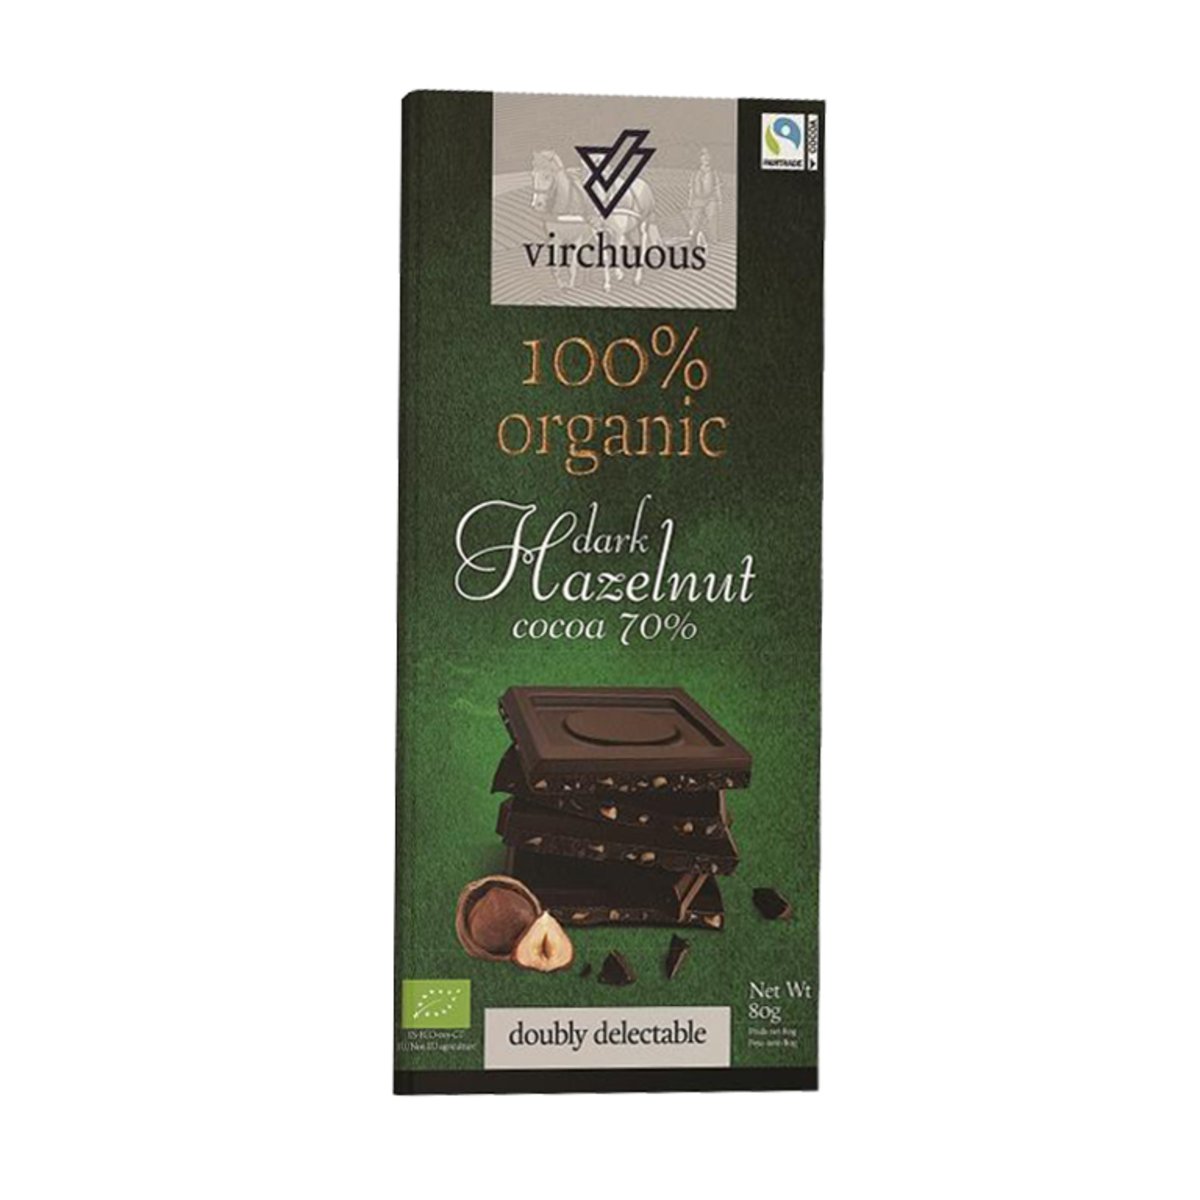 Virchuous 100% Organic Swiss Dark Hazelnut Chocolates Gluten Free 80g